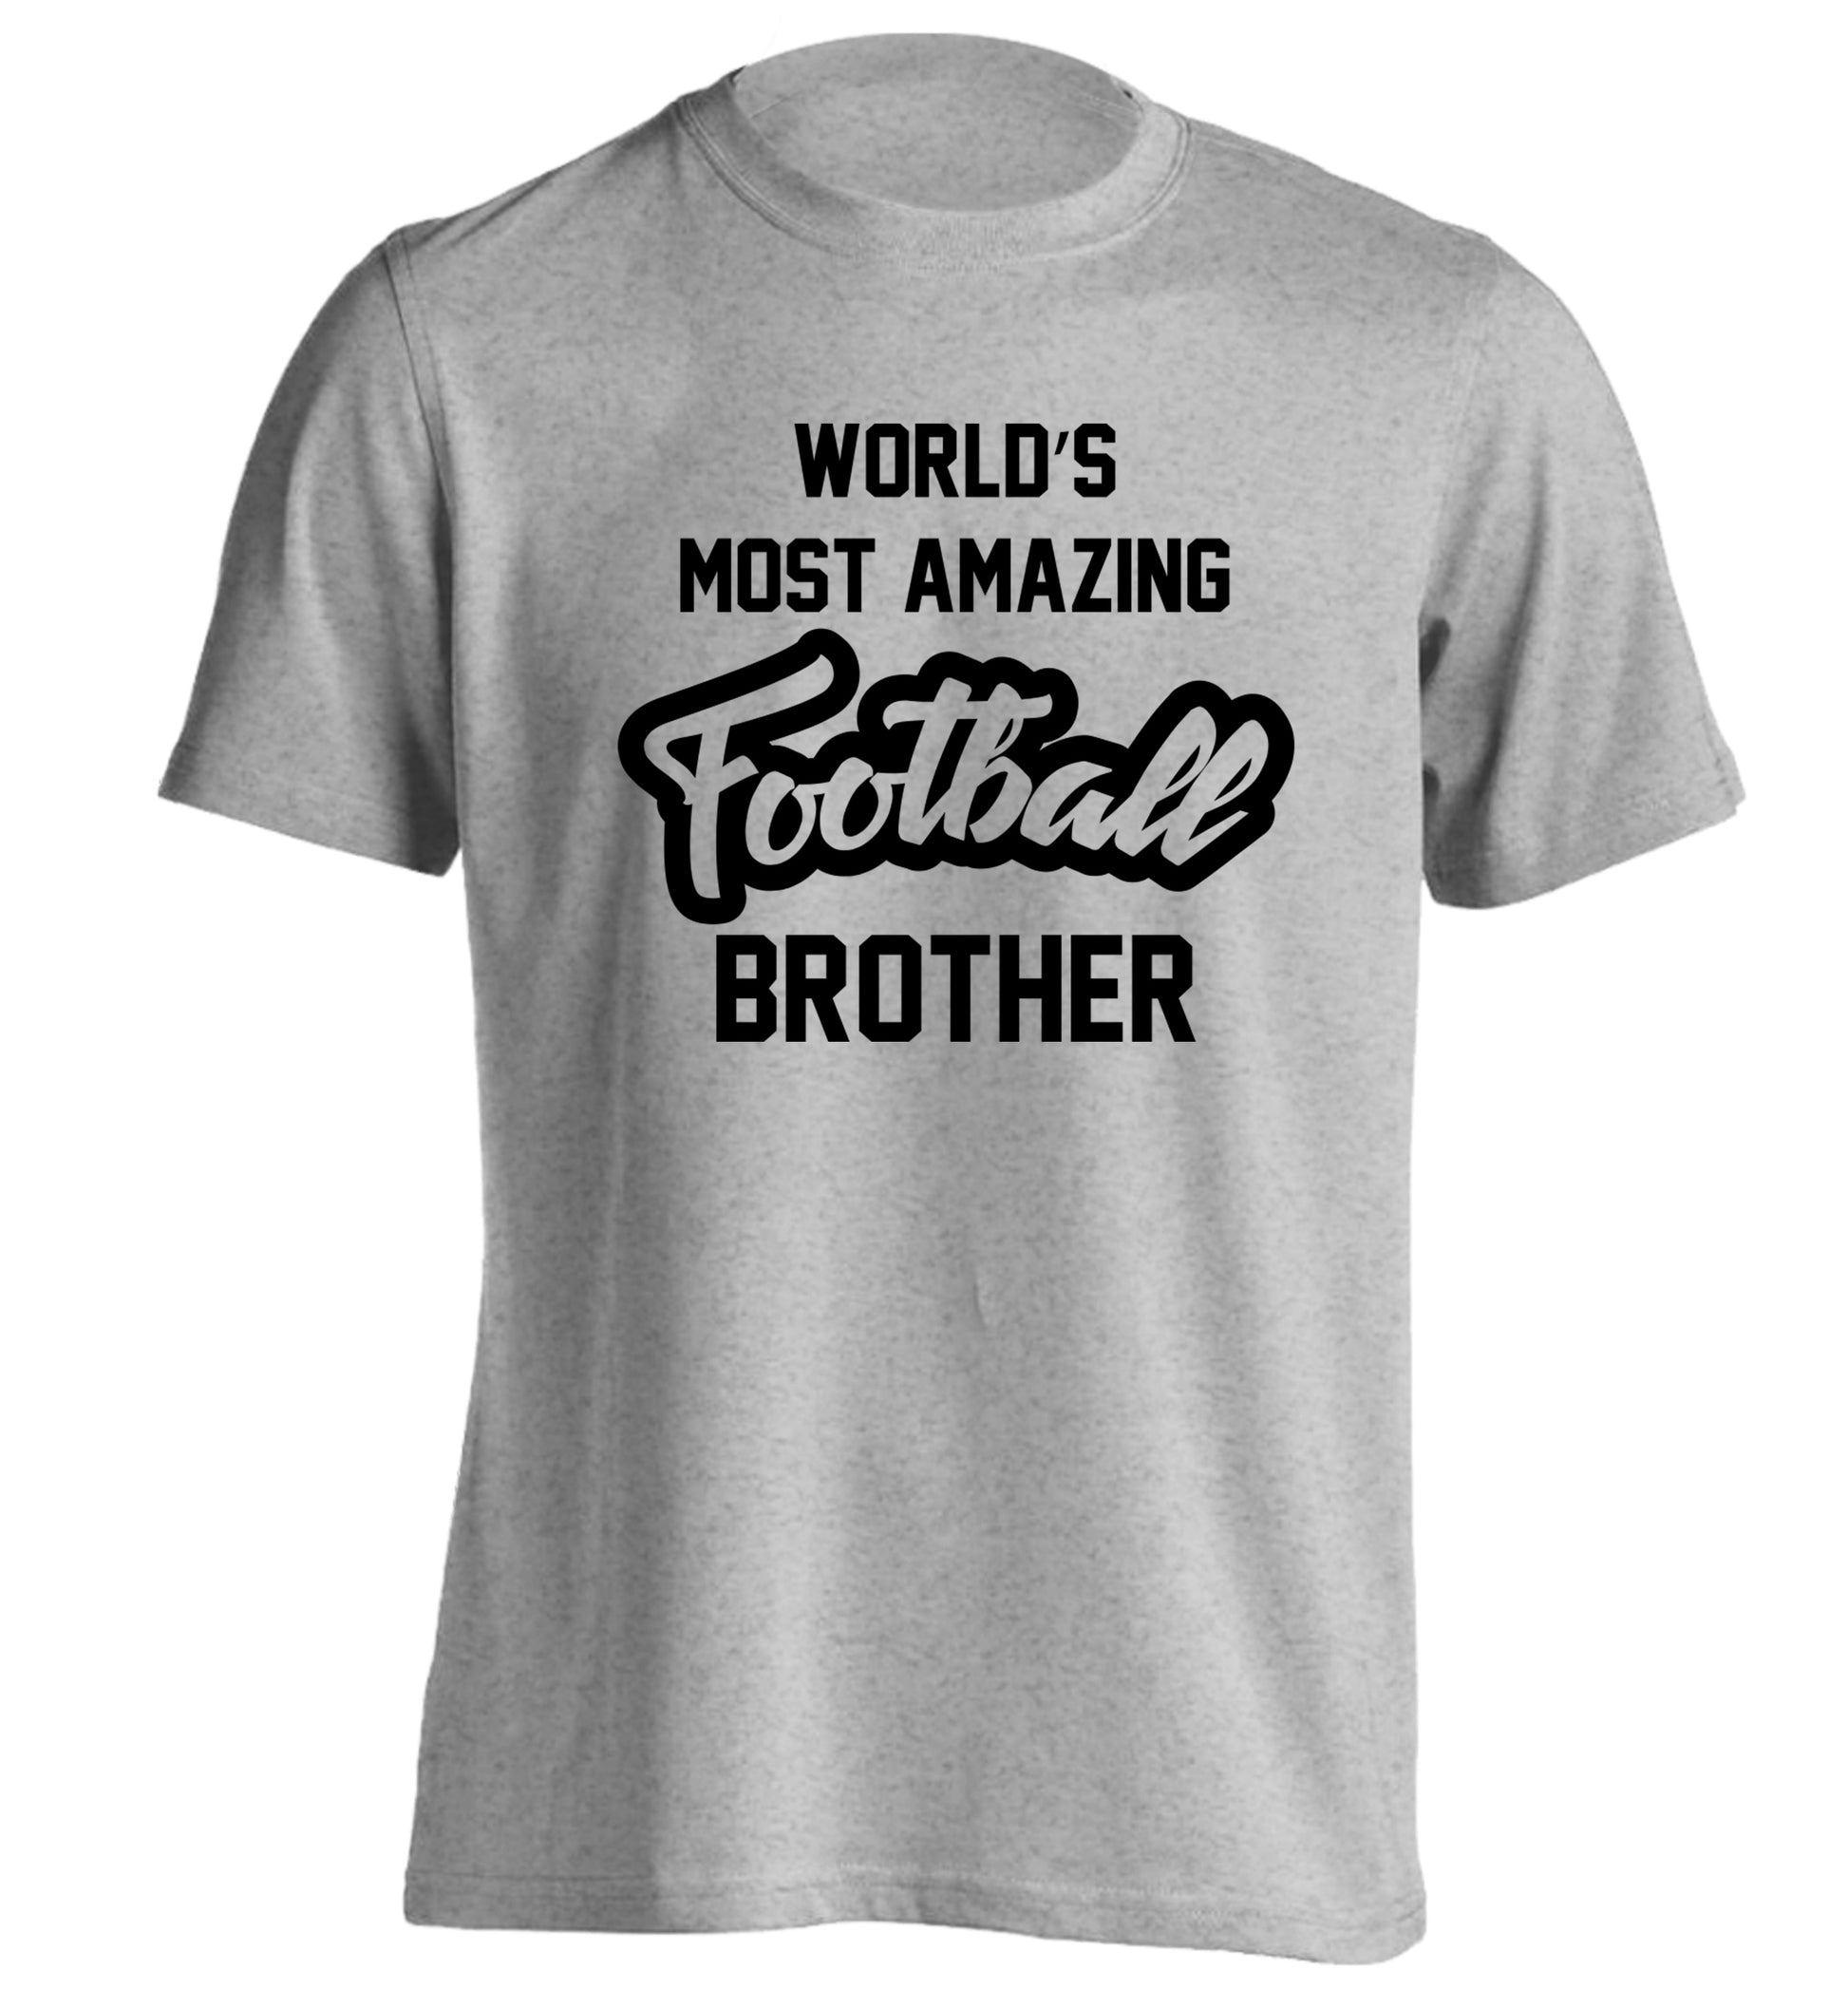 Worlds most amazing football brother adults unisexgrey Tshirt 2XL